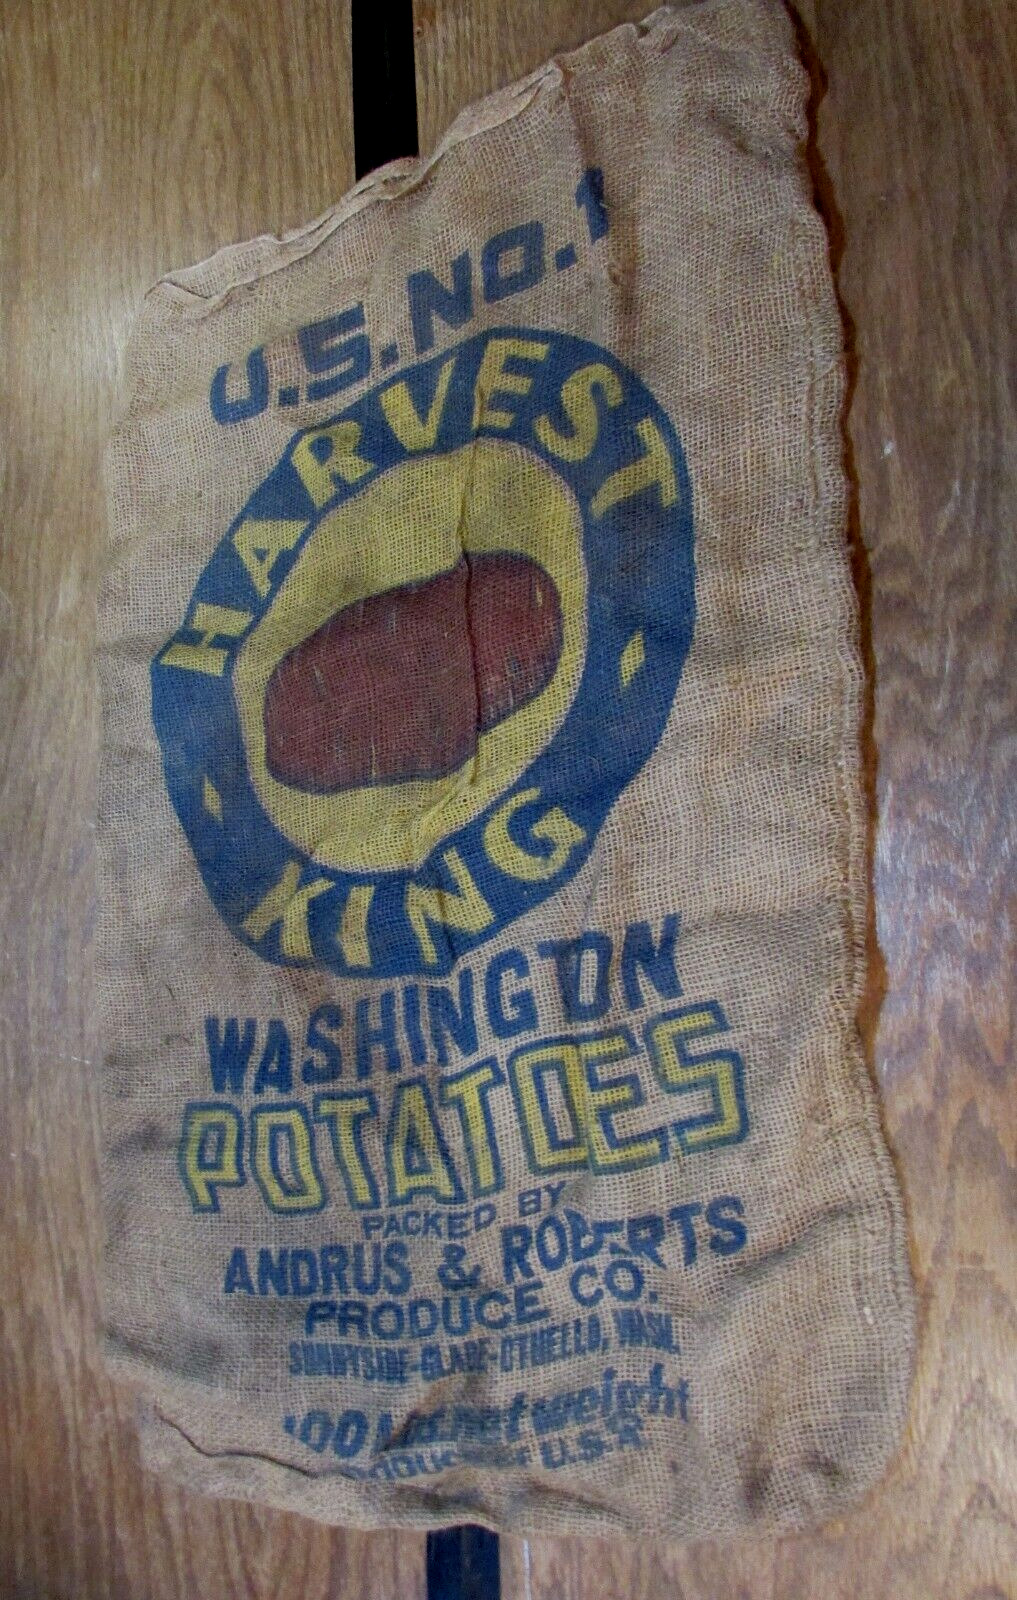 Andrus Roberts Harvest King Washington Potato Sack Old 100 lb Size Burlap Bag